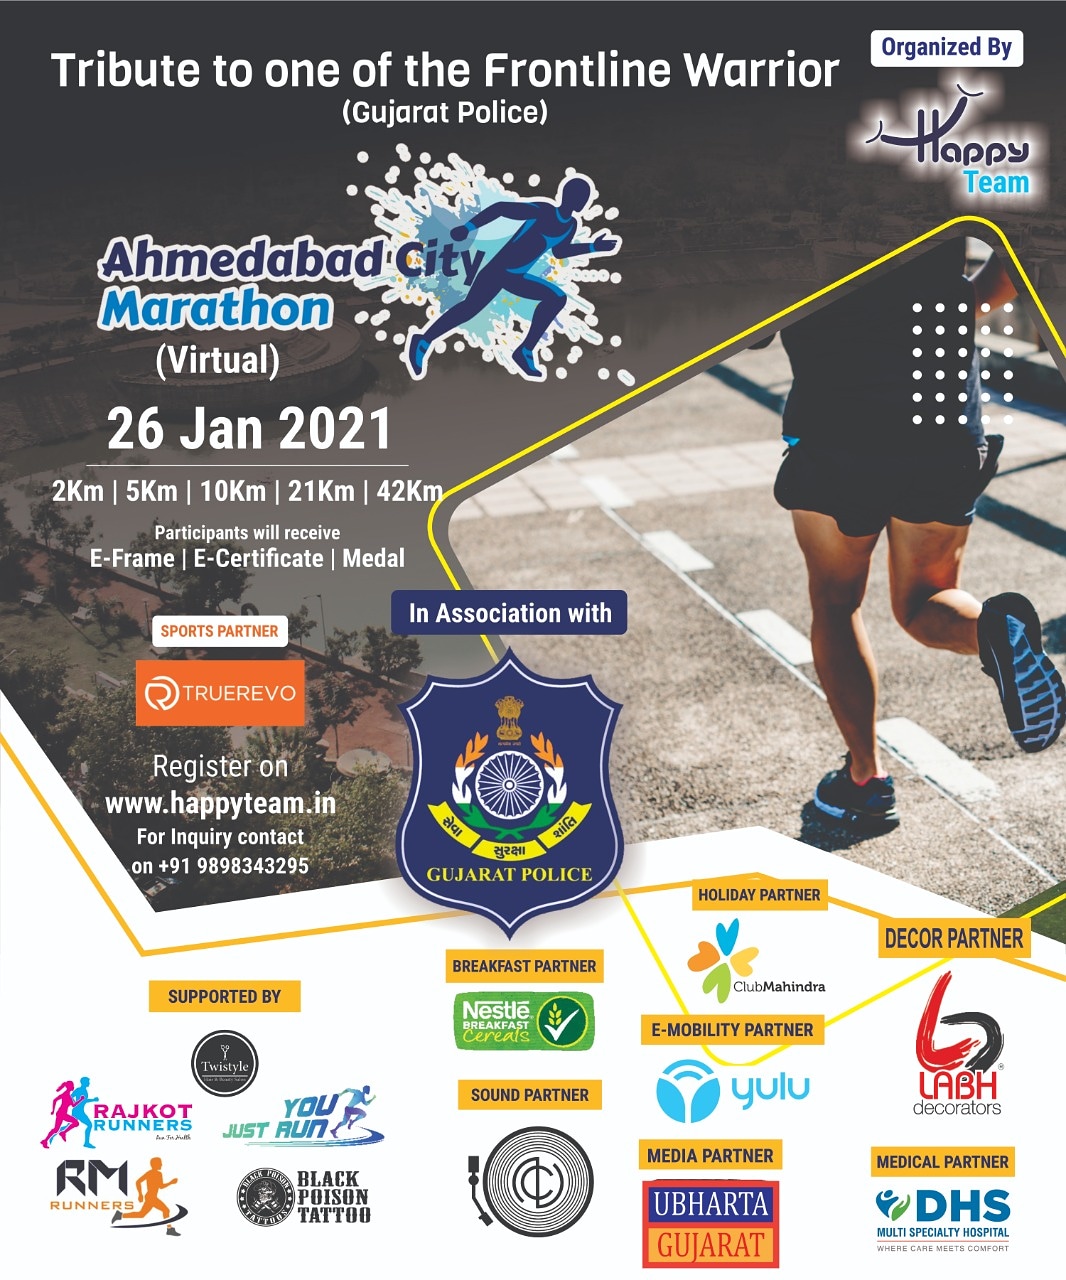 Ahmedabad City Marathon (Virtual)